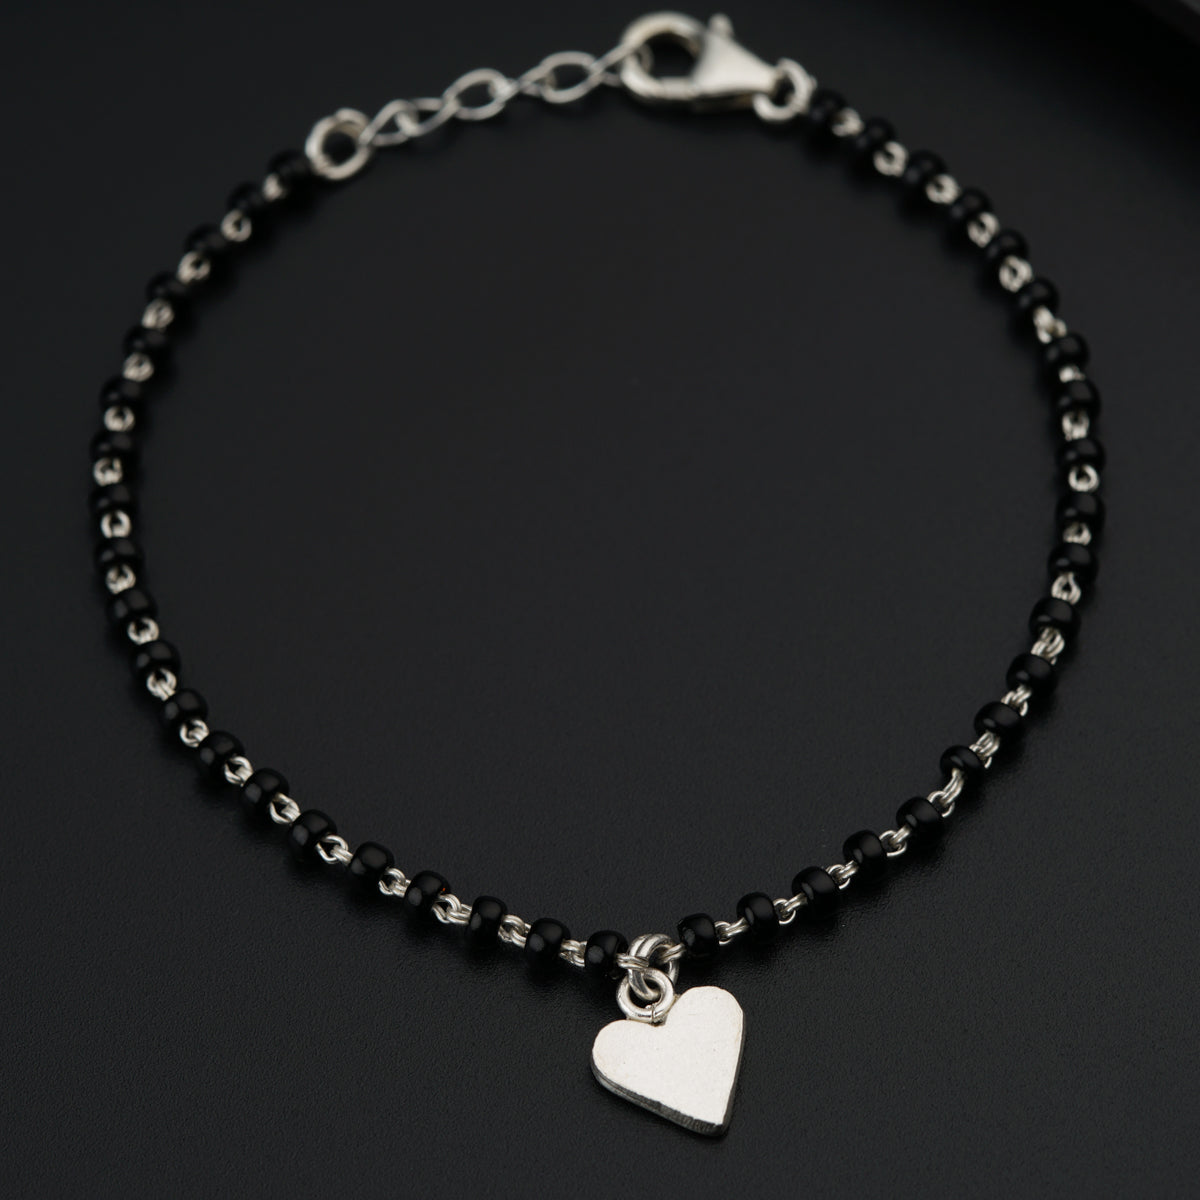 a black beaded bracelet with a heart charm